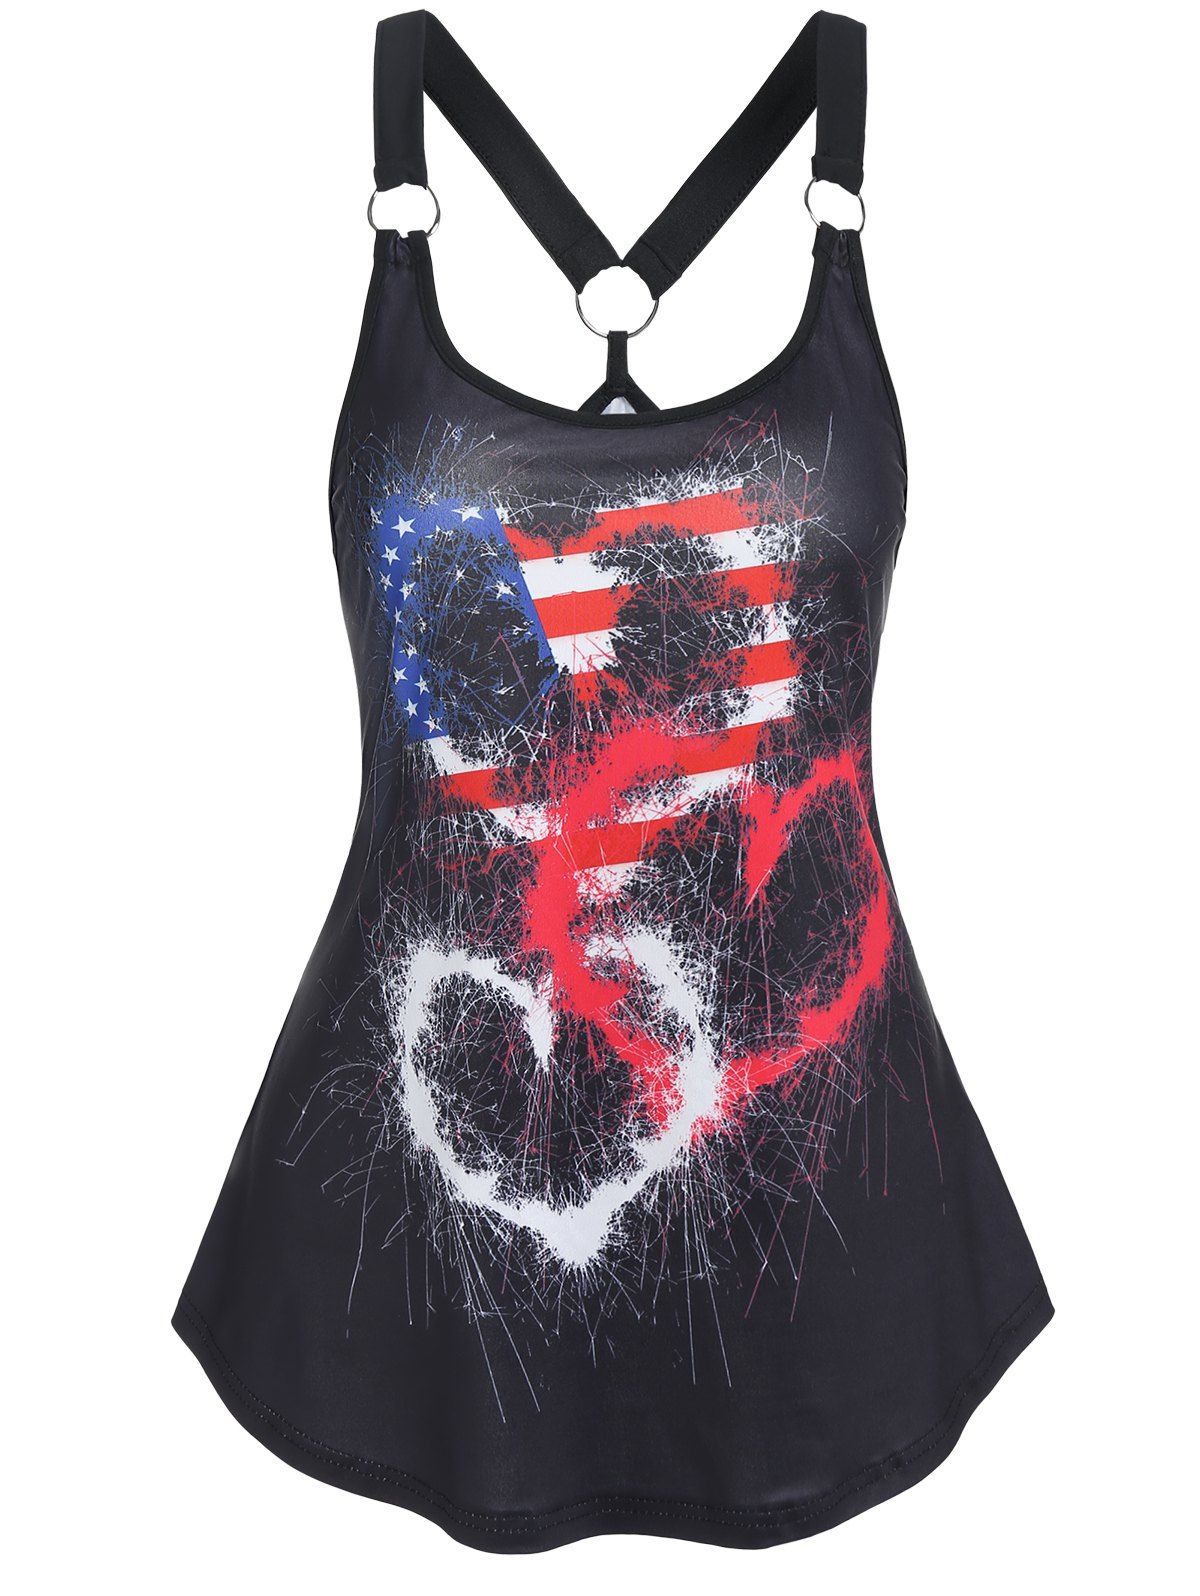 Summer Tank Top American Flag Heart Print O Ring Cut Out Patriotic Casual Top - BLACK L